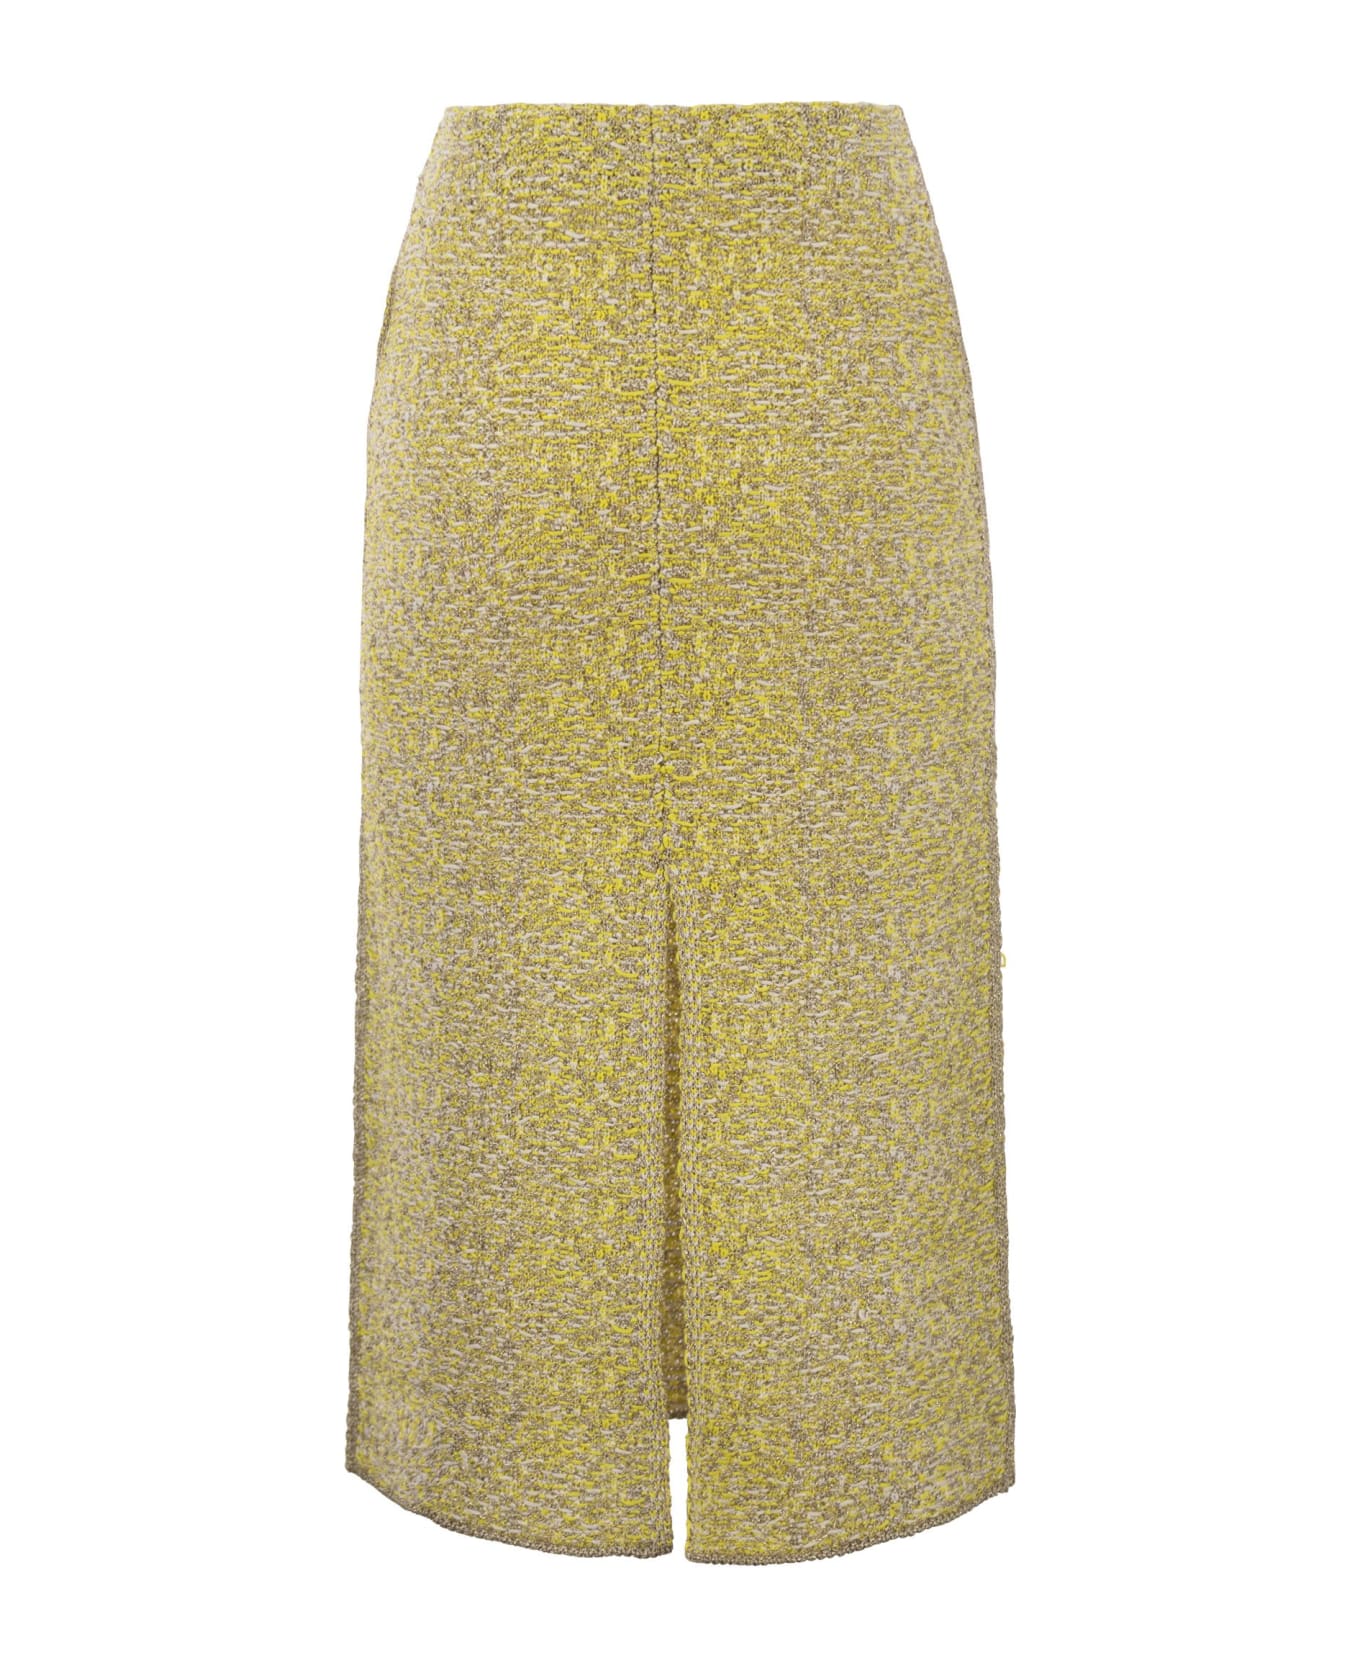 Fabiana Filippi Tweed Stitch Pencil Skirt - Yellow/gold